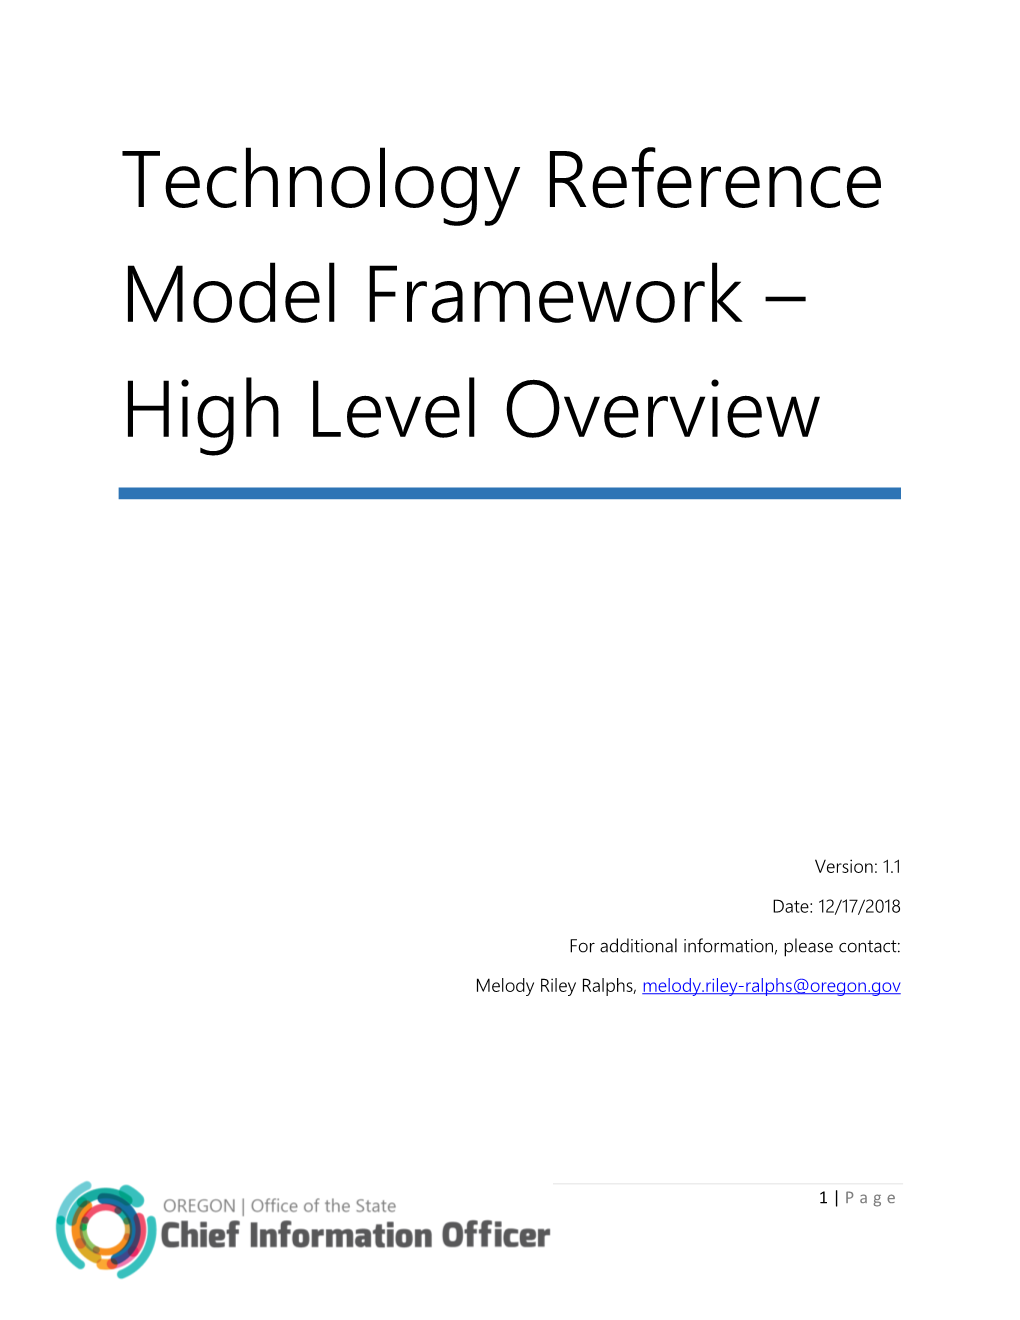 Technology Reference Model Framework – High Level Overview